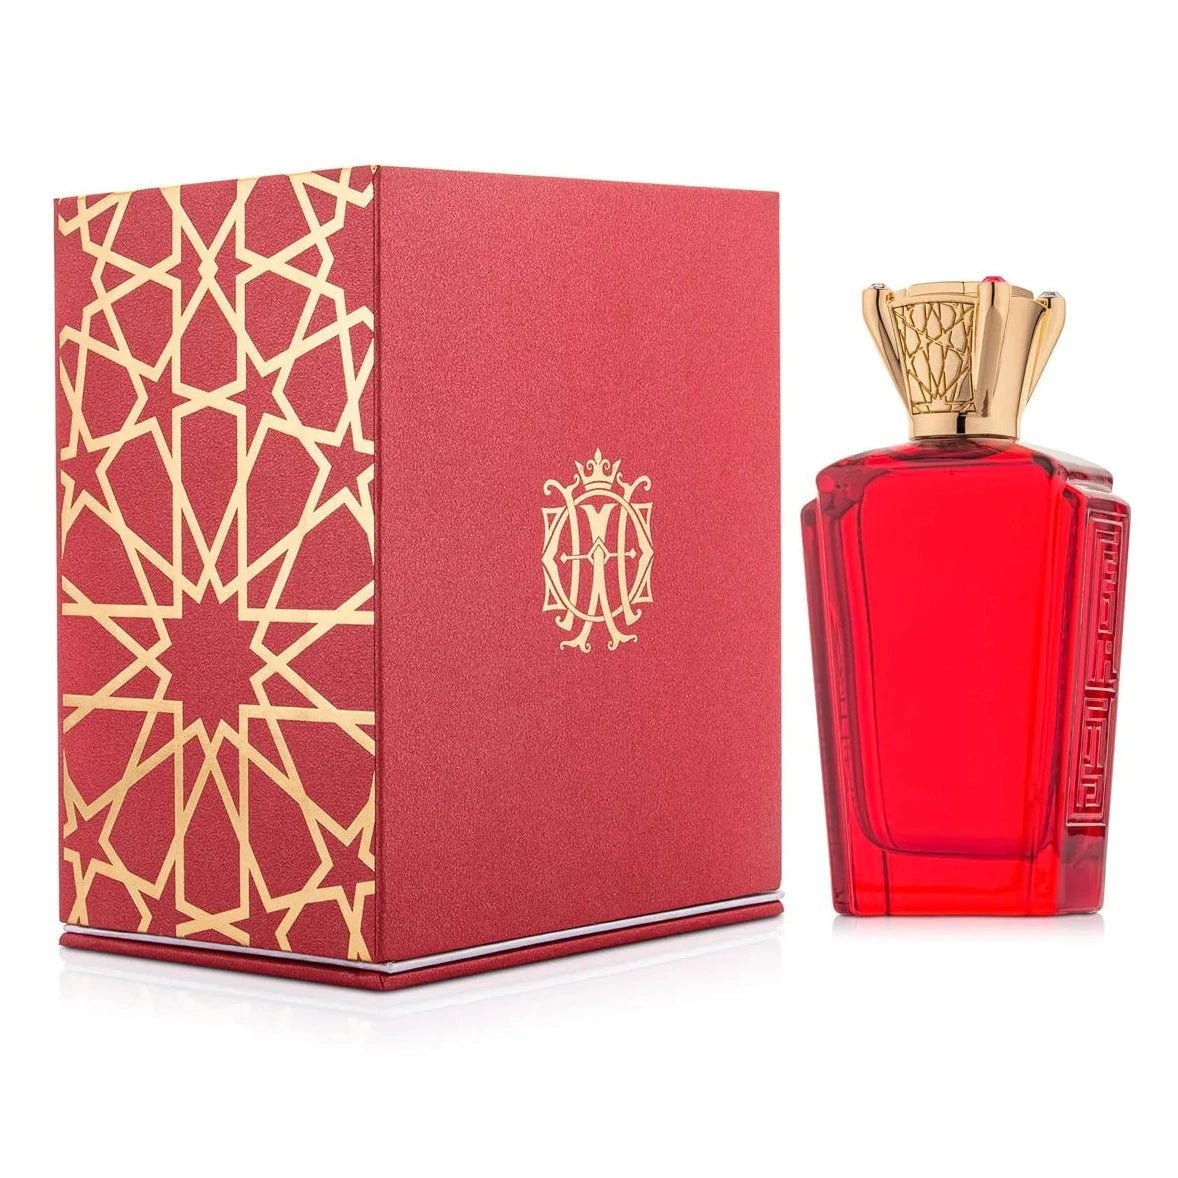 Attar Al Has Spice Rose EDP | My Perfume Shop Australia